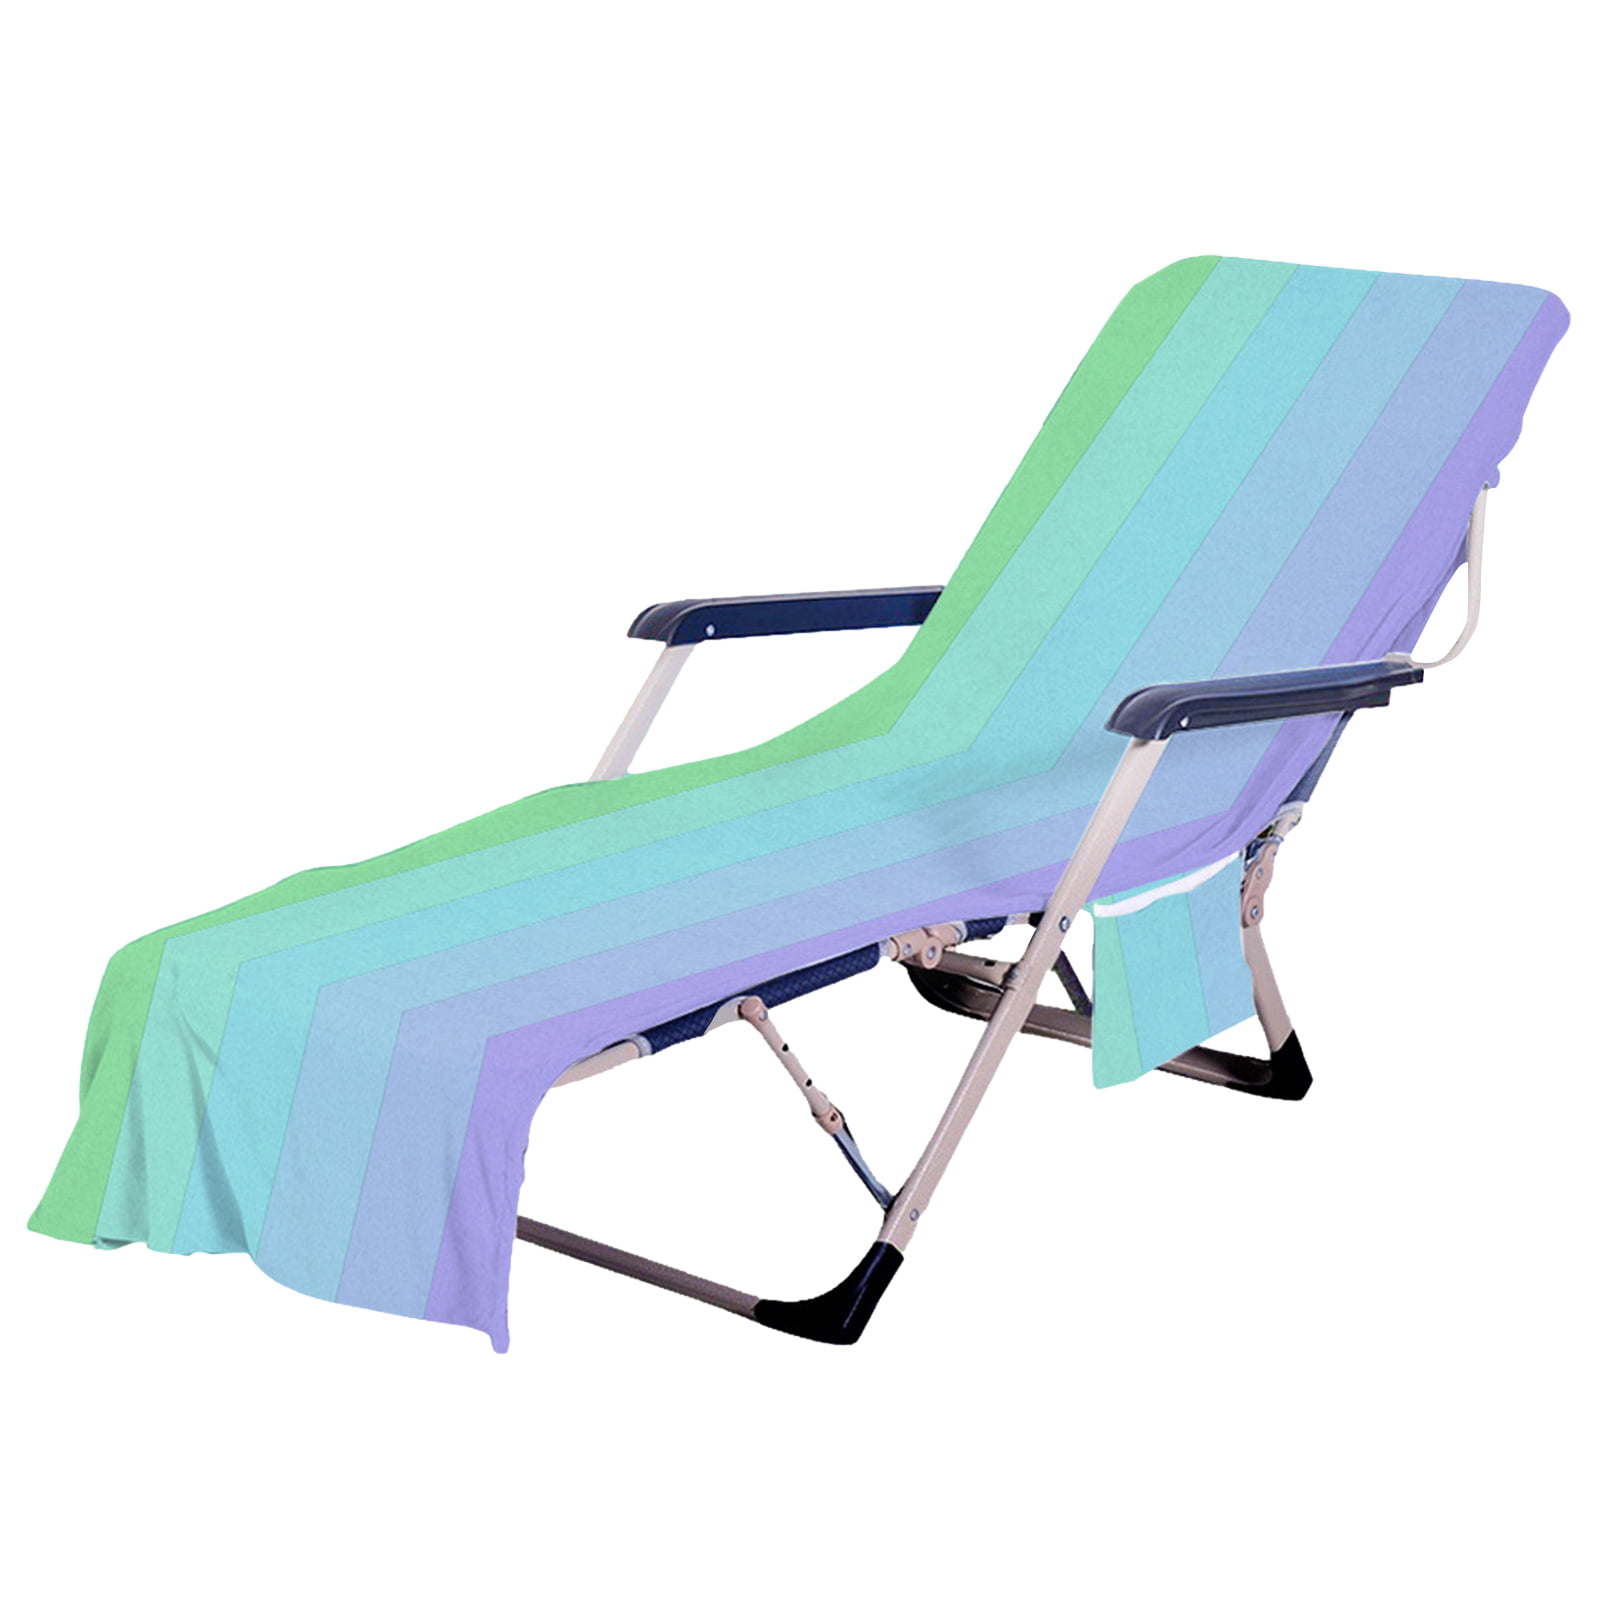 Details about   Portable Beach Chair Cover Towels Bath Towel Strap Lounger Summer Carry Bag SH 